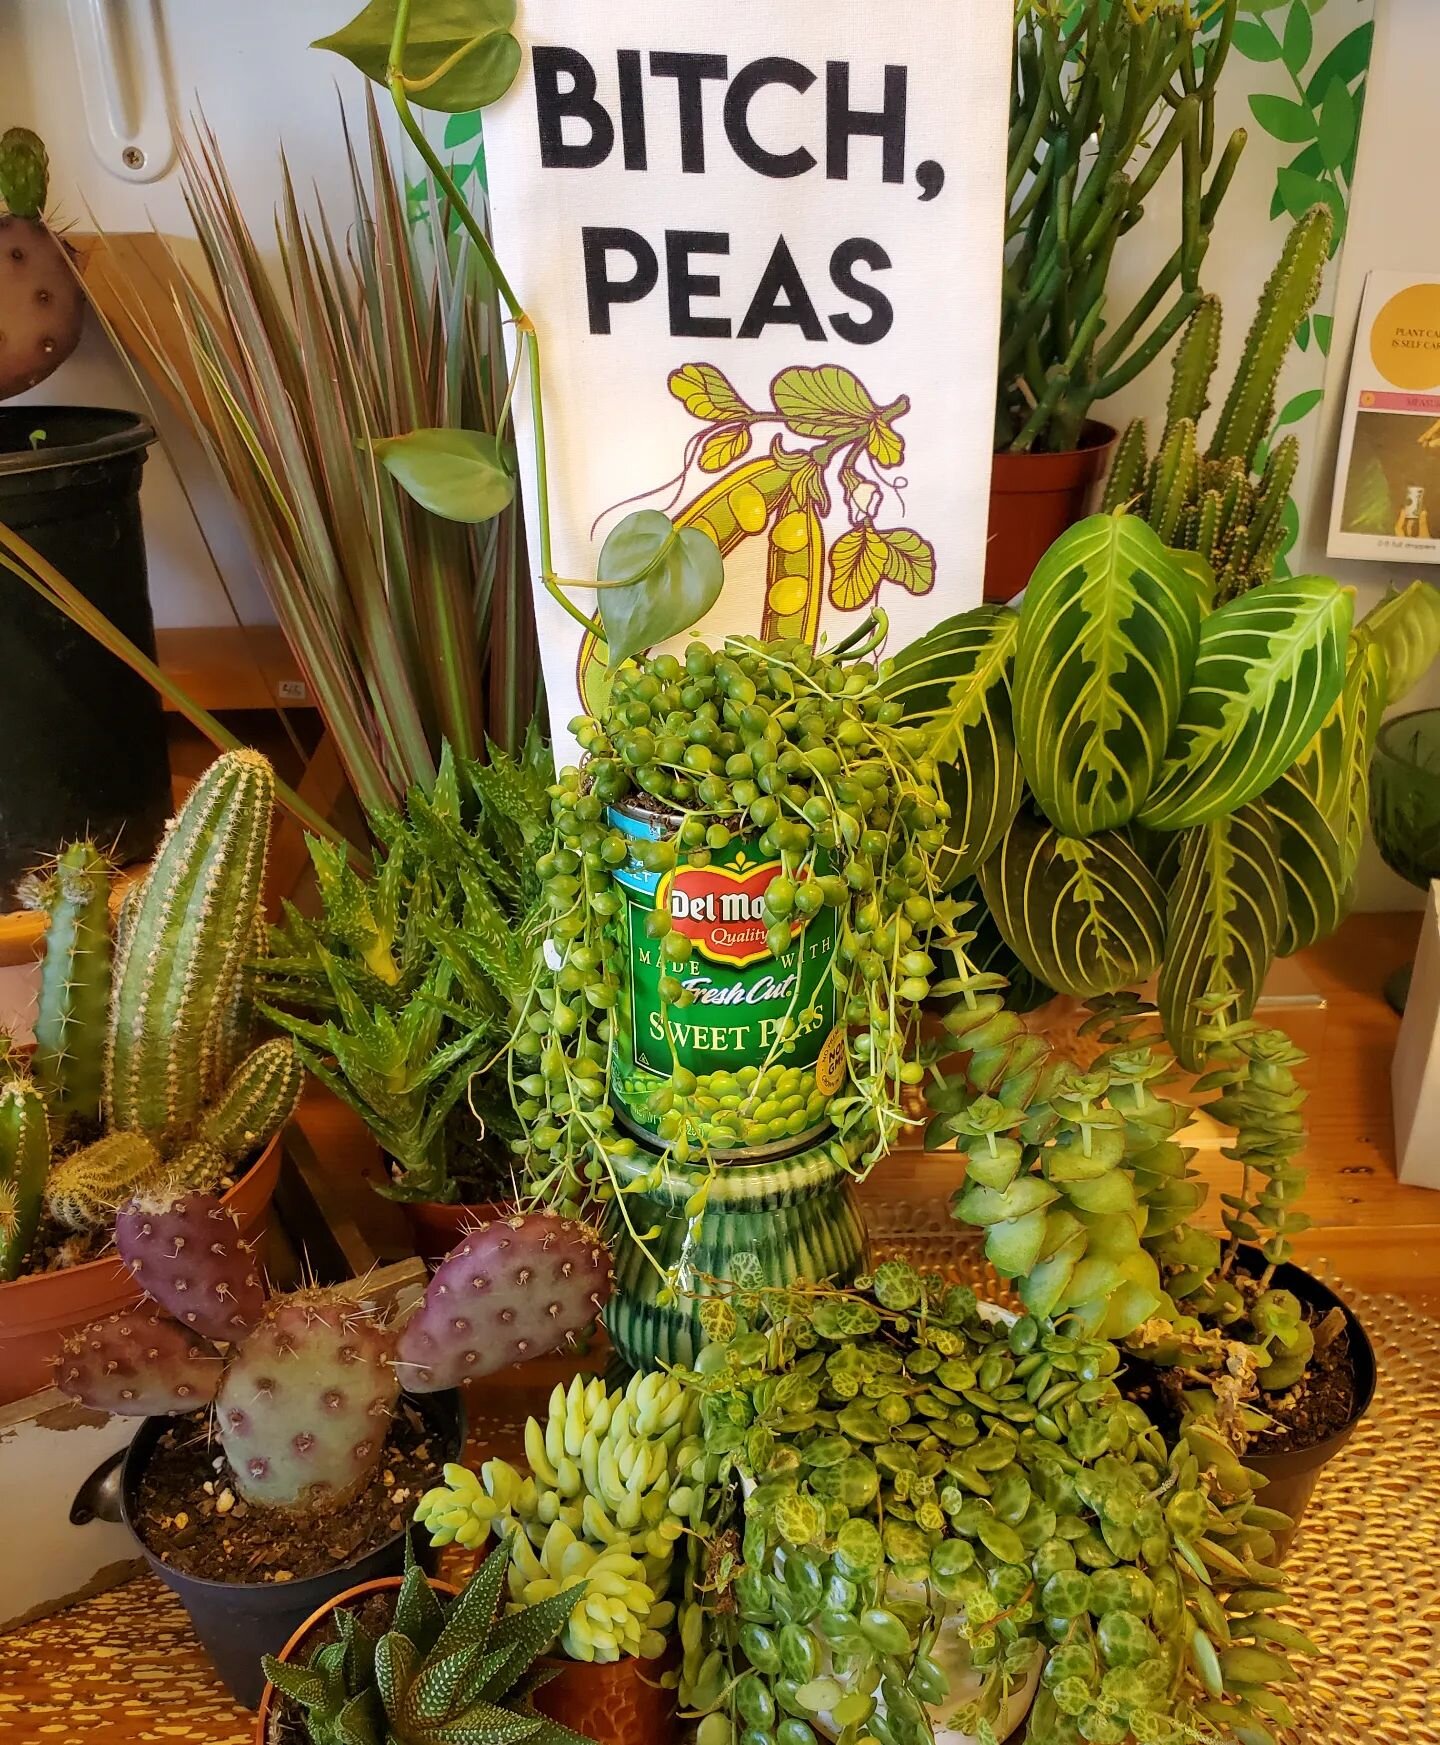 Pass the peas 😘 

#stringofpearls #stringoftears #stringofturtles #strings #stringsofthings #peas #tins #eatyourveggies #thesearethejokespeople #cute #instacute #instaplants #houseplantsofinstagram #plantoftheday #houseplants #plantshop #plantshops 